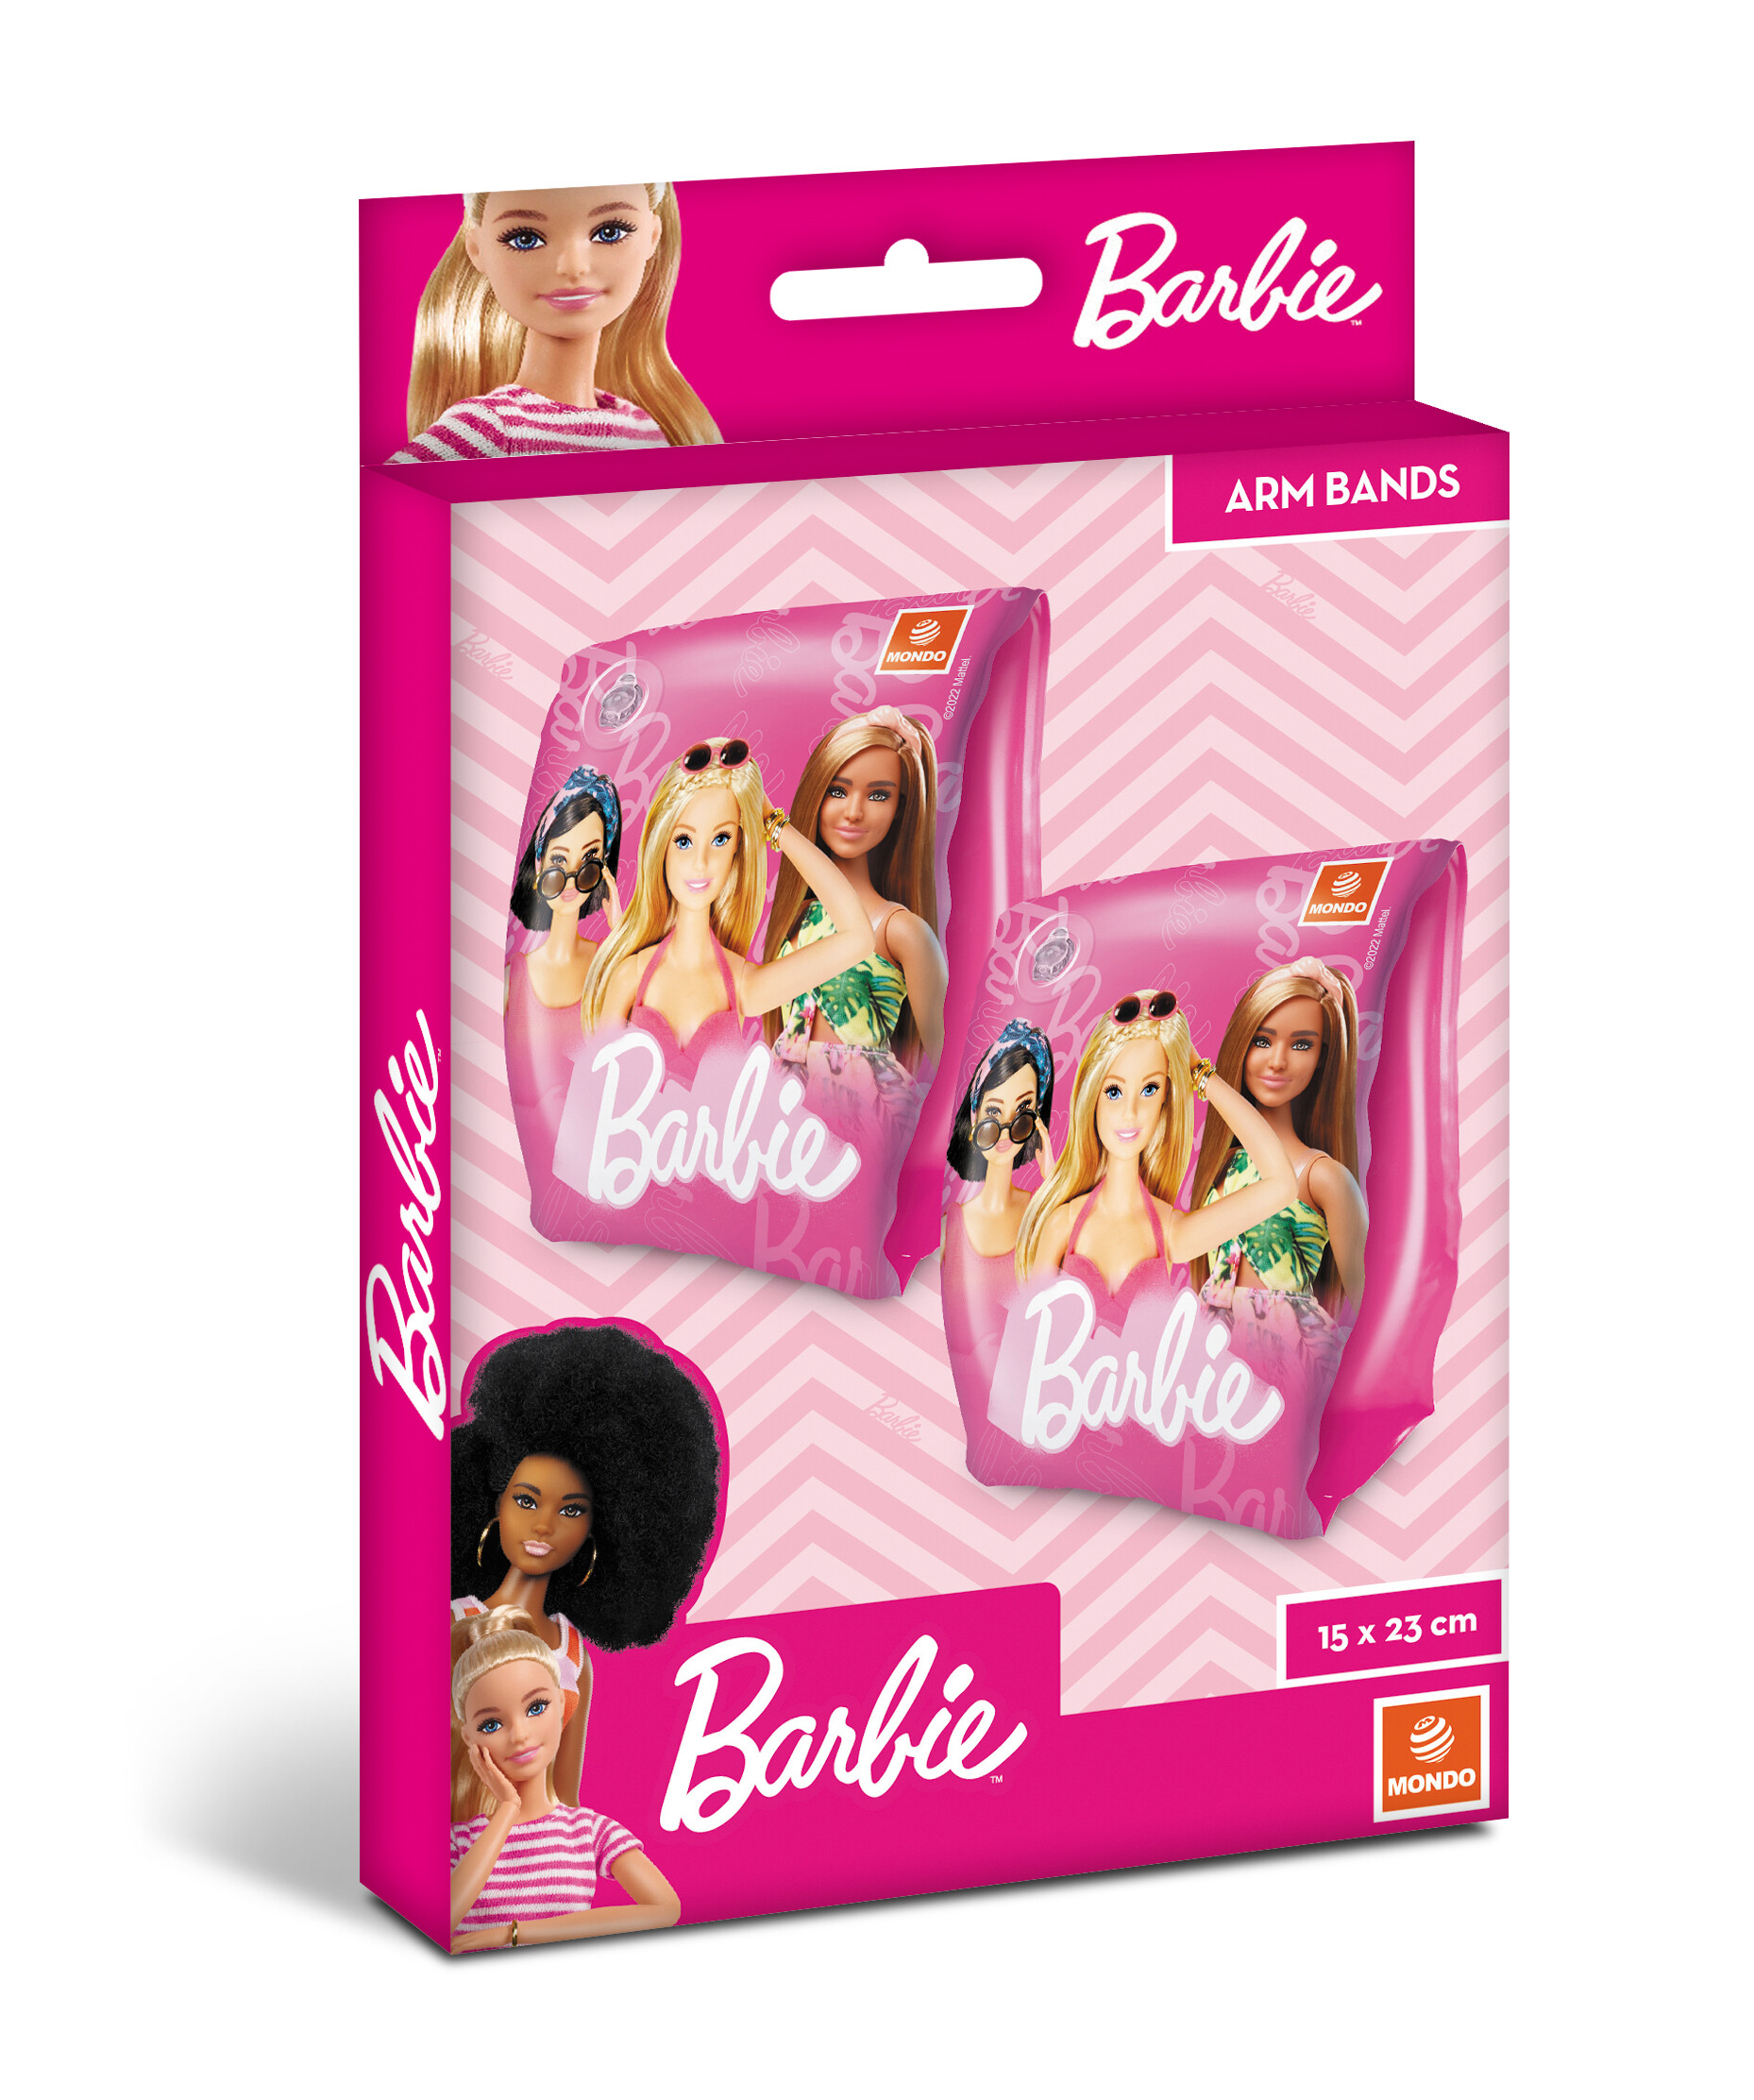 Barbie arm bands - braccioli di sicurezza per bambini - materiale pvc - adatti a bambini da 2 a 6 anni con peso 6-20 kg - Barbie